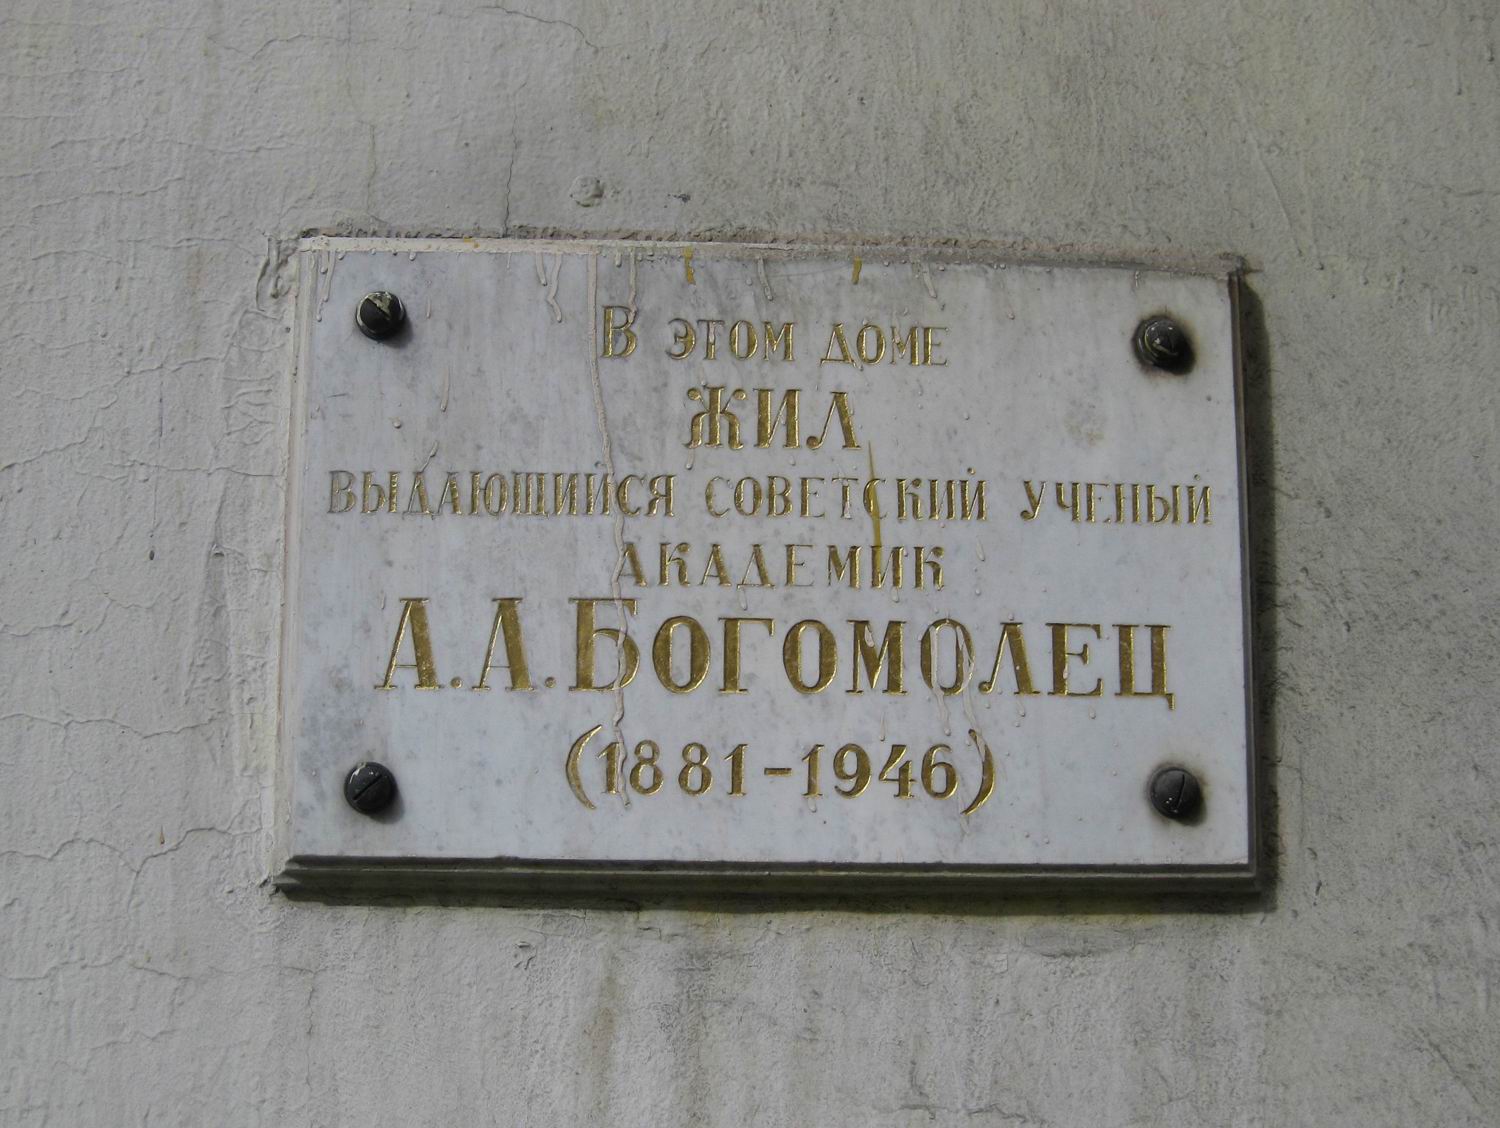 Мемориальная доска Богомольцу А.А. (1881–1946), на Сивцевом вражке, дом 4.